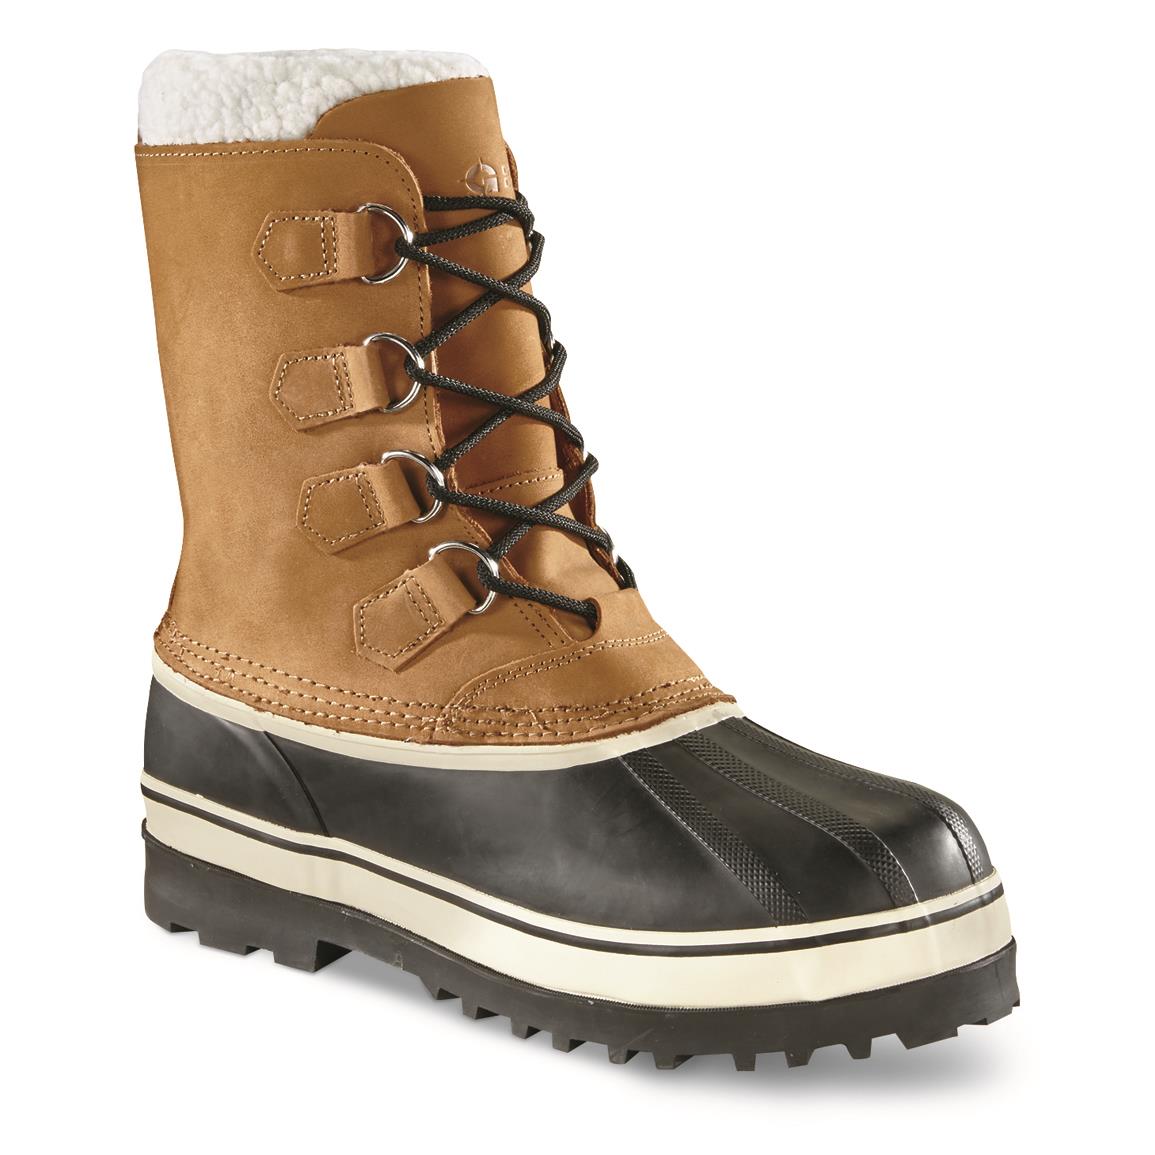 Nisswa Waterproof Winter Boots - 697567 